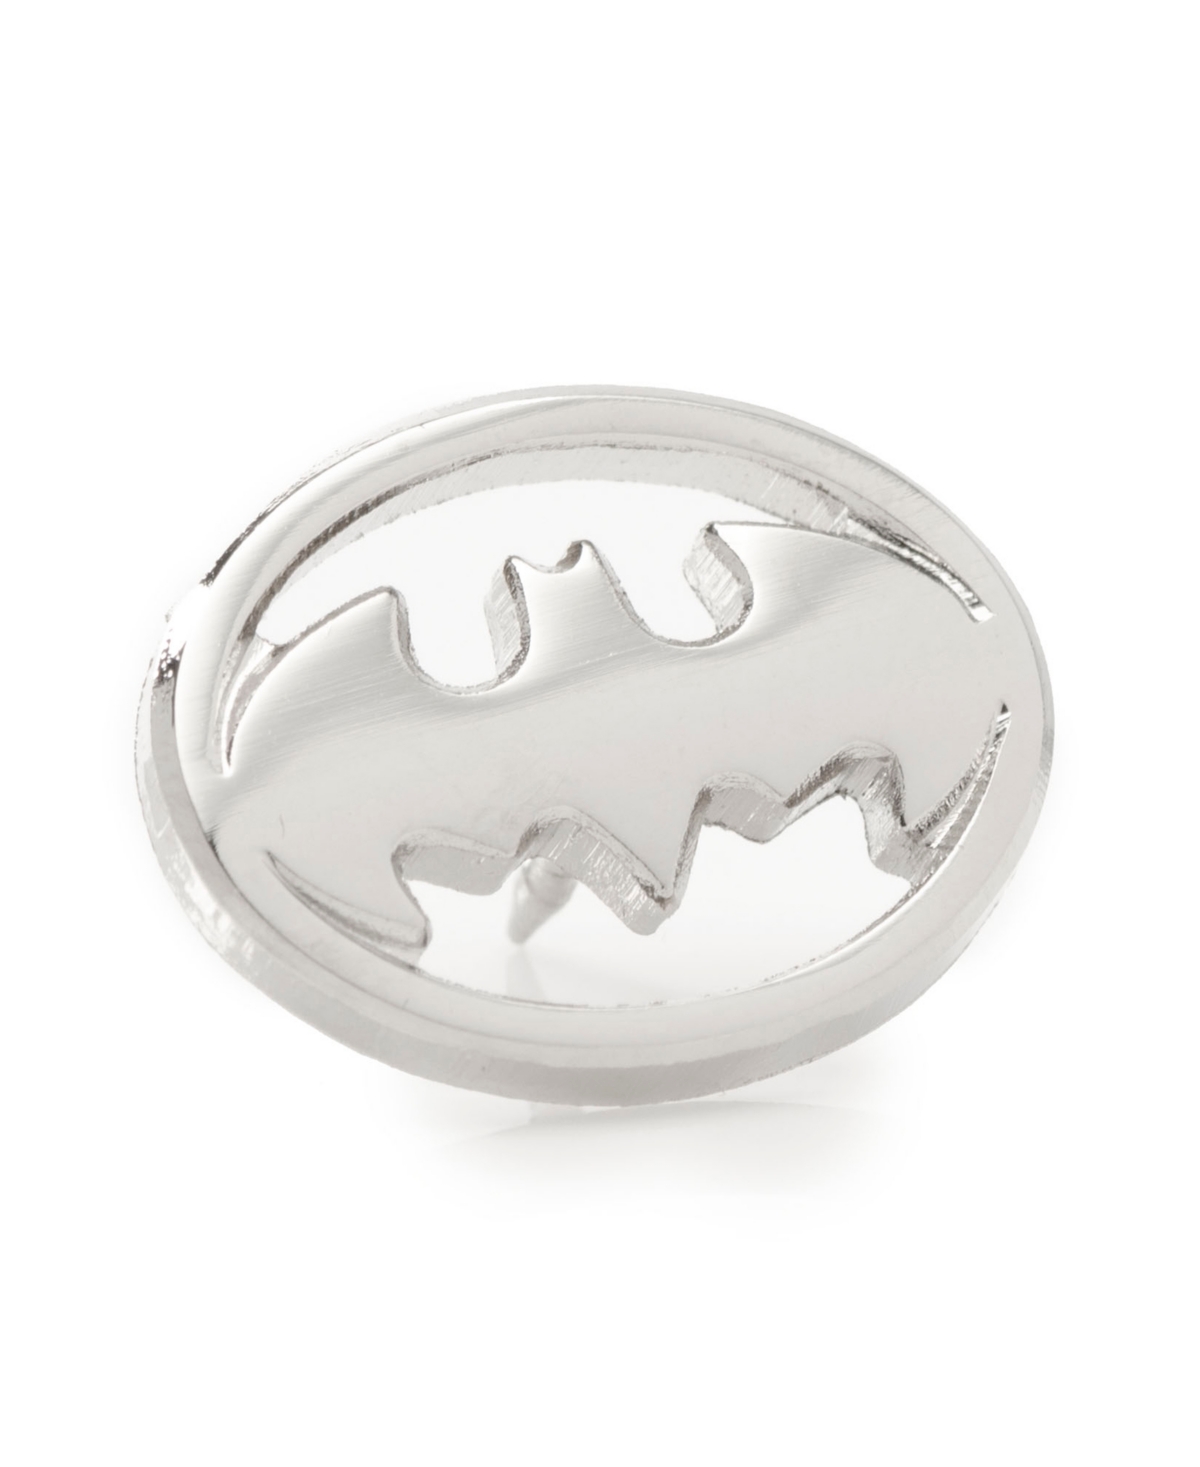 Men's Batman Stainless Steel Lapel Pin - Silver-Tone